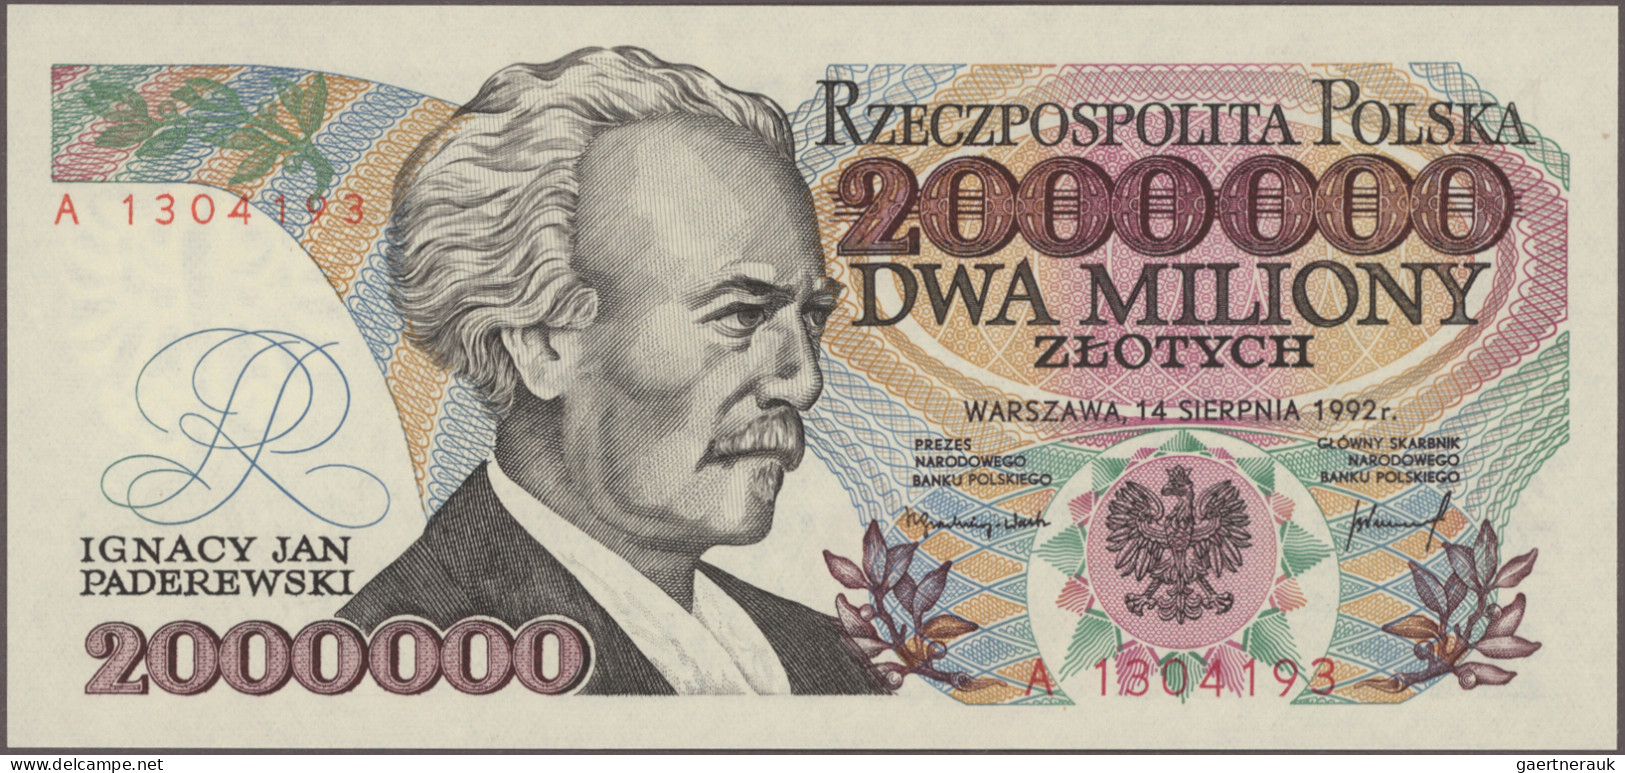 Poland - Bank notes: Narodowy Bank Polski, huge lot with 40 banknotes, series 19